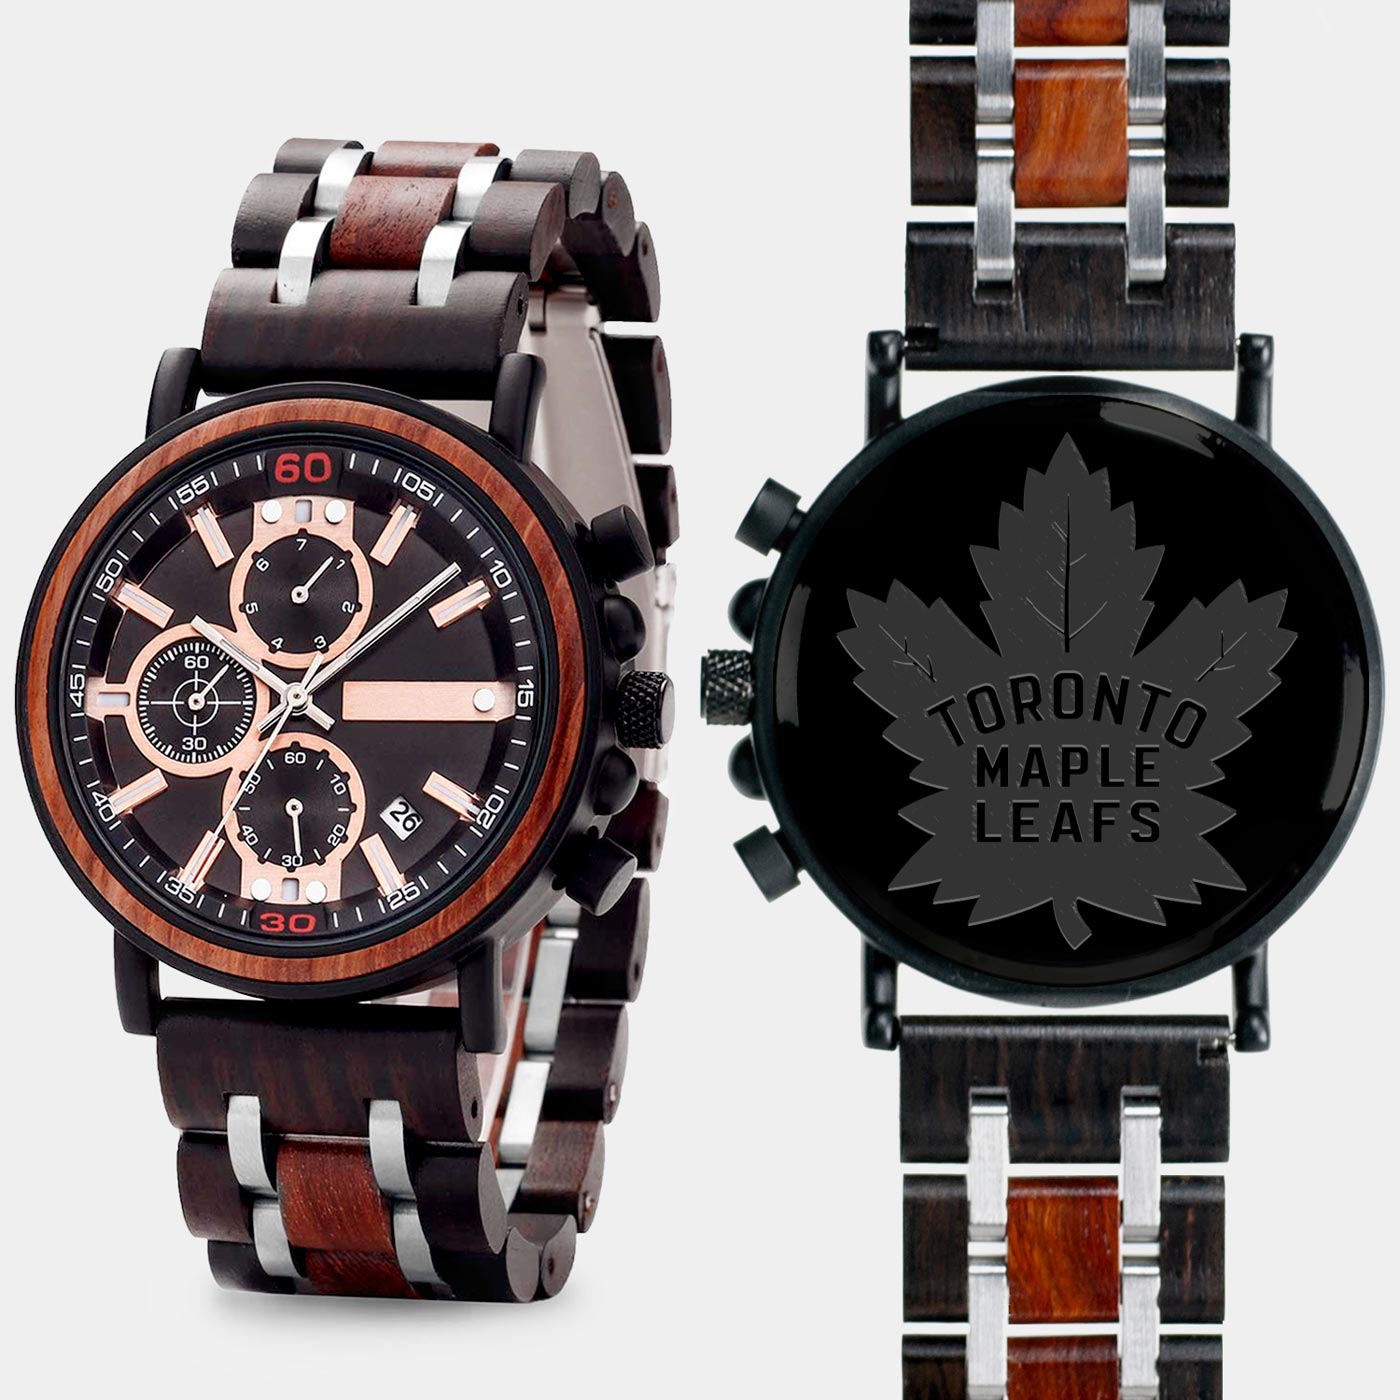 Toronto Maple Leafs Wooden Wristwatch Mahogany And Walnut Wood Chronograph Watch - Free Custom Engraving